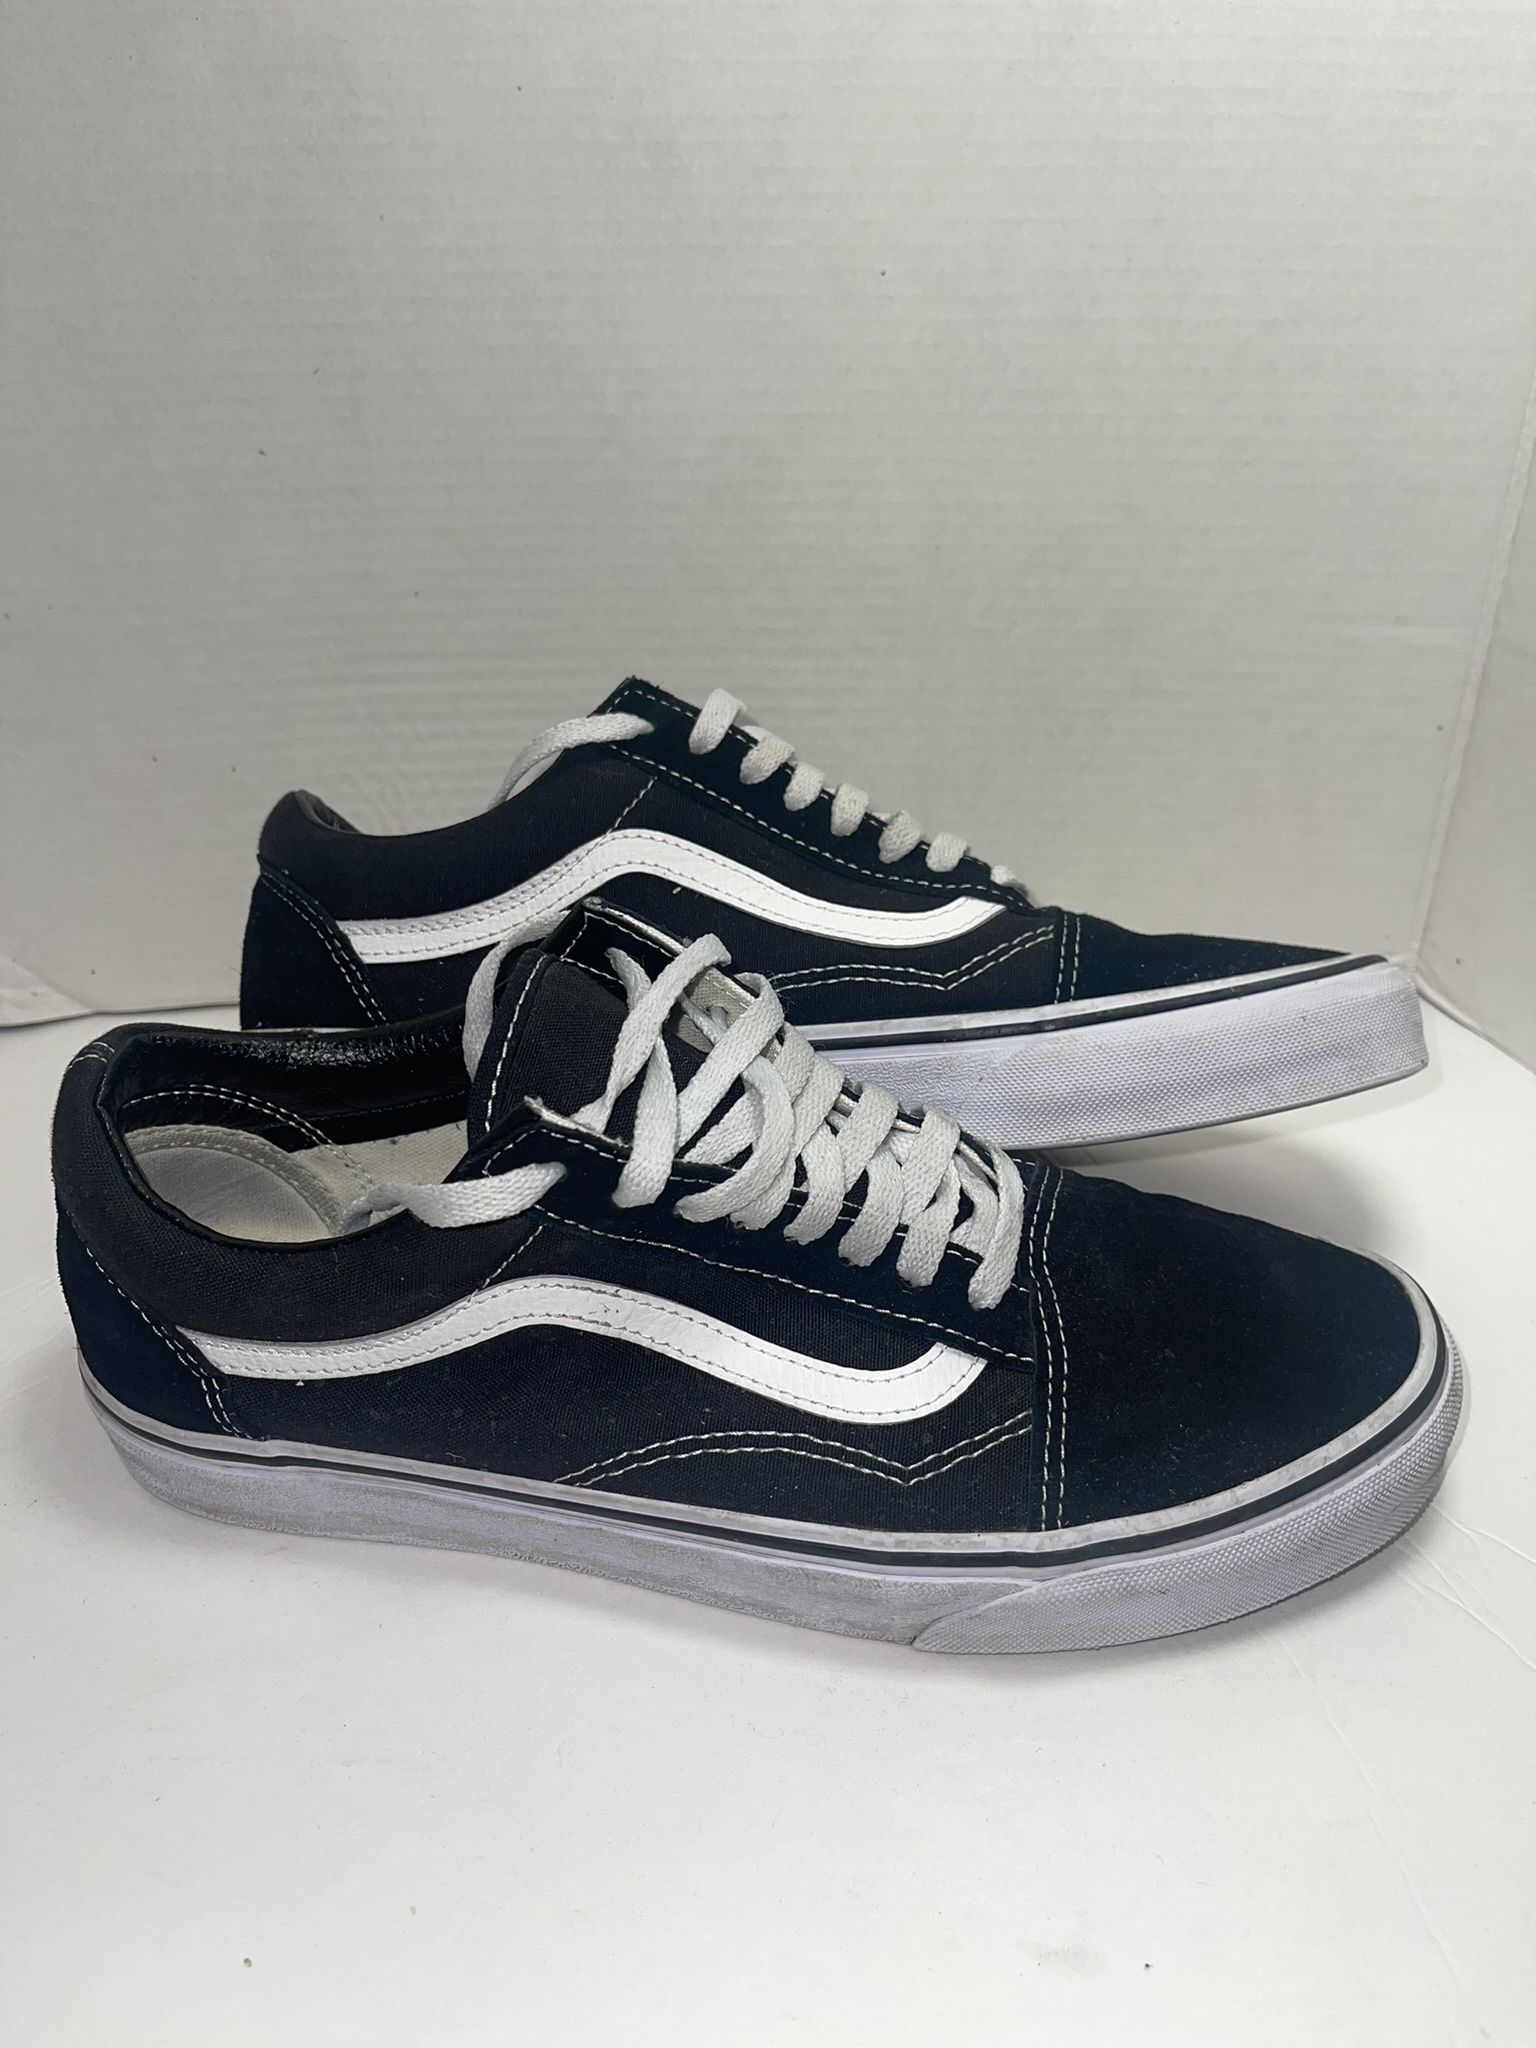 Vans Men's Old Skool Shoes, Size: 10.0, Black/White